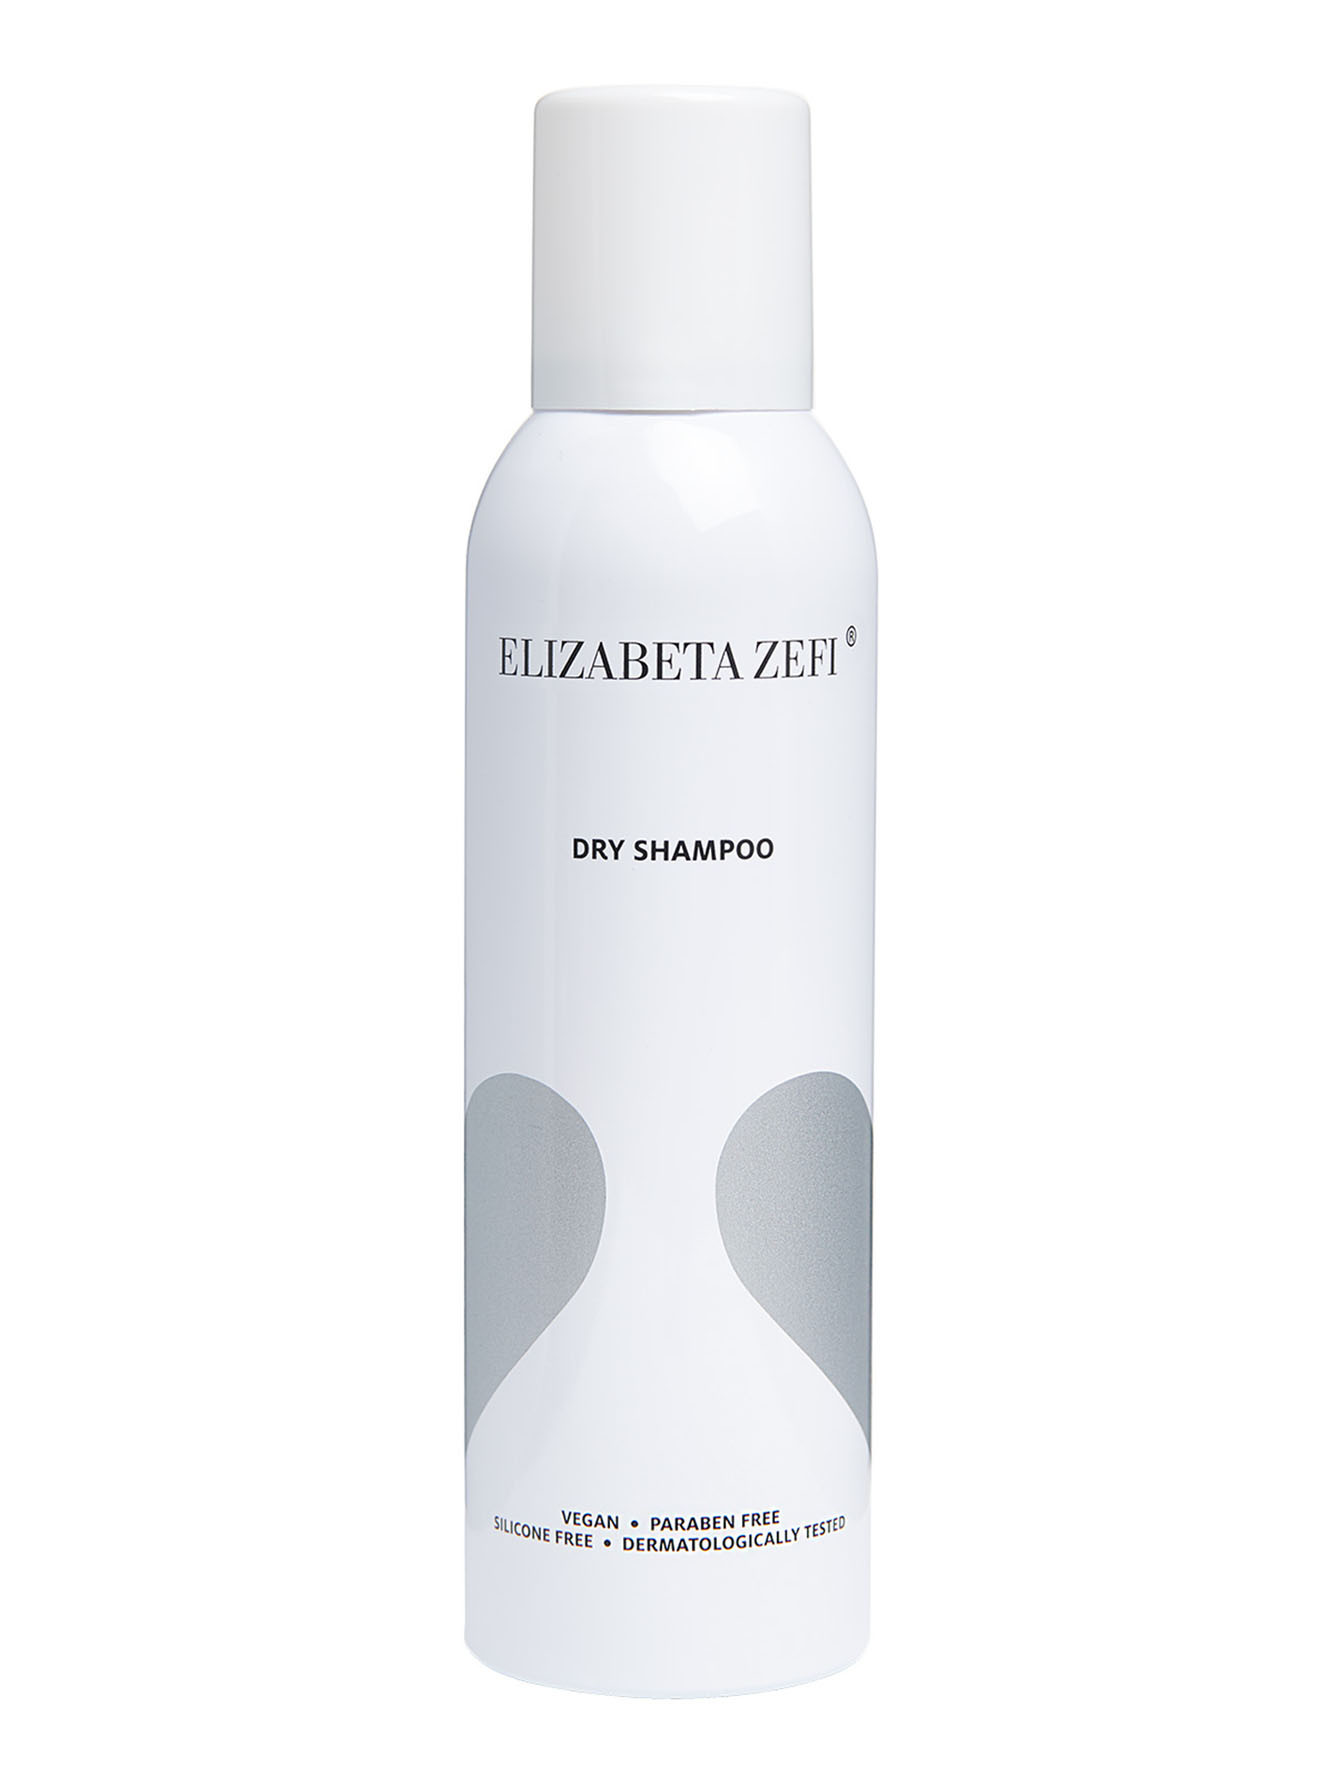 Сухой шампунь для волос Dry Shampoo, 200 мл - Общий вид